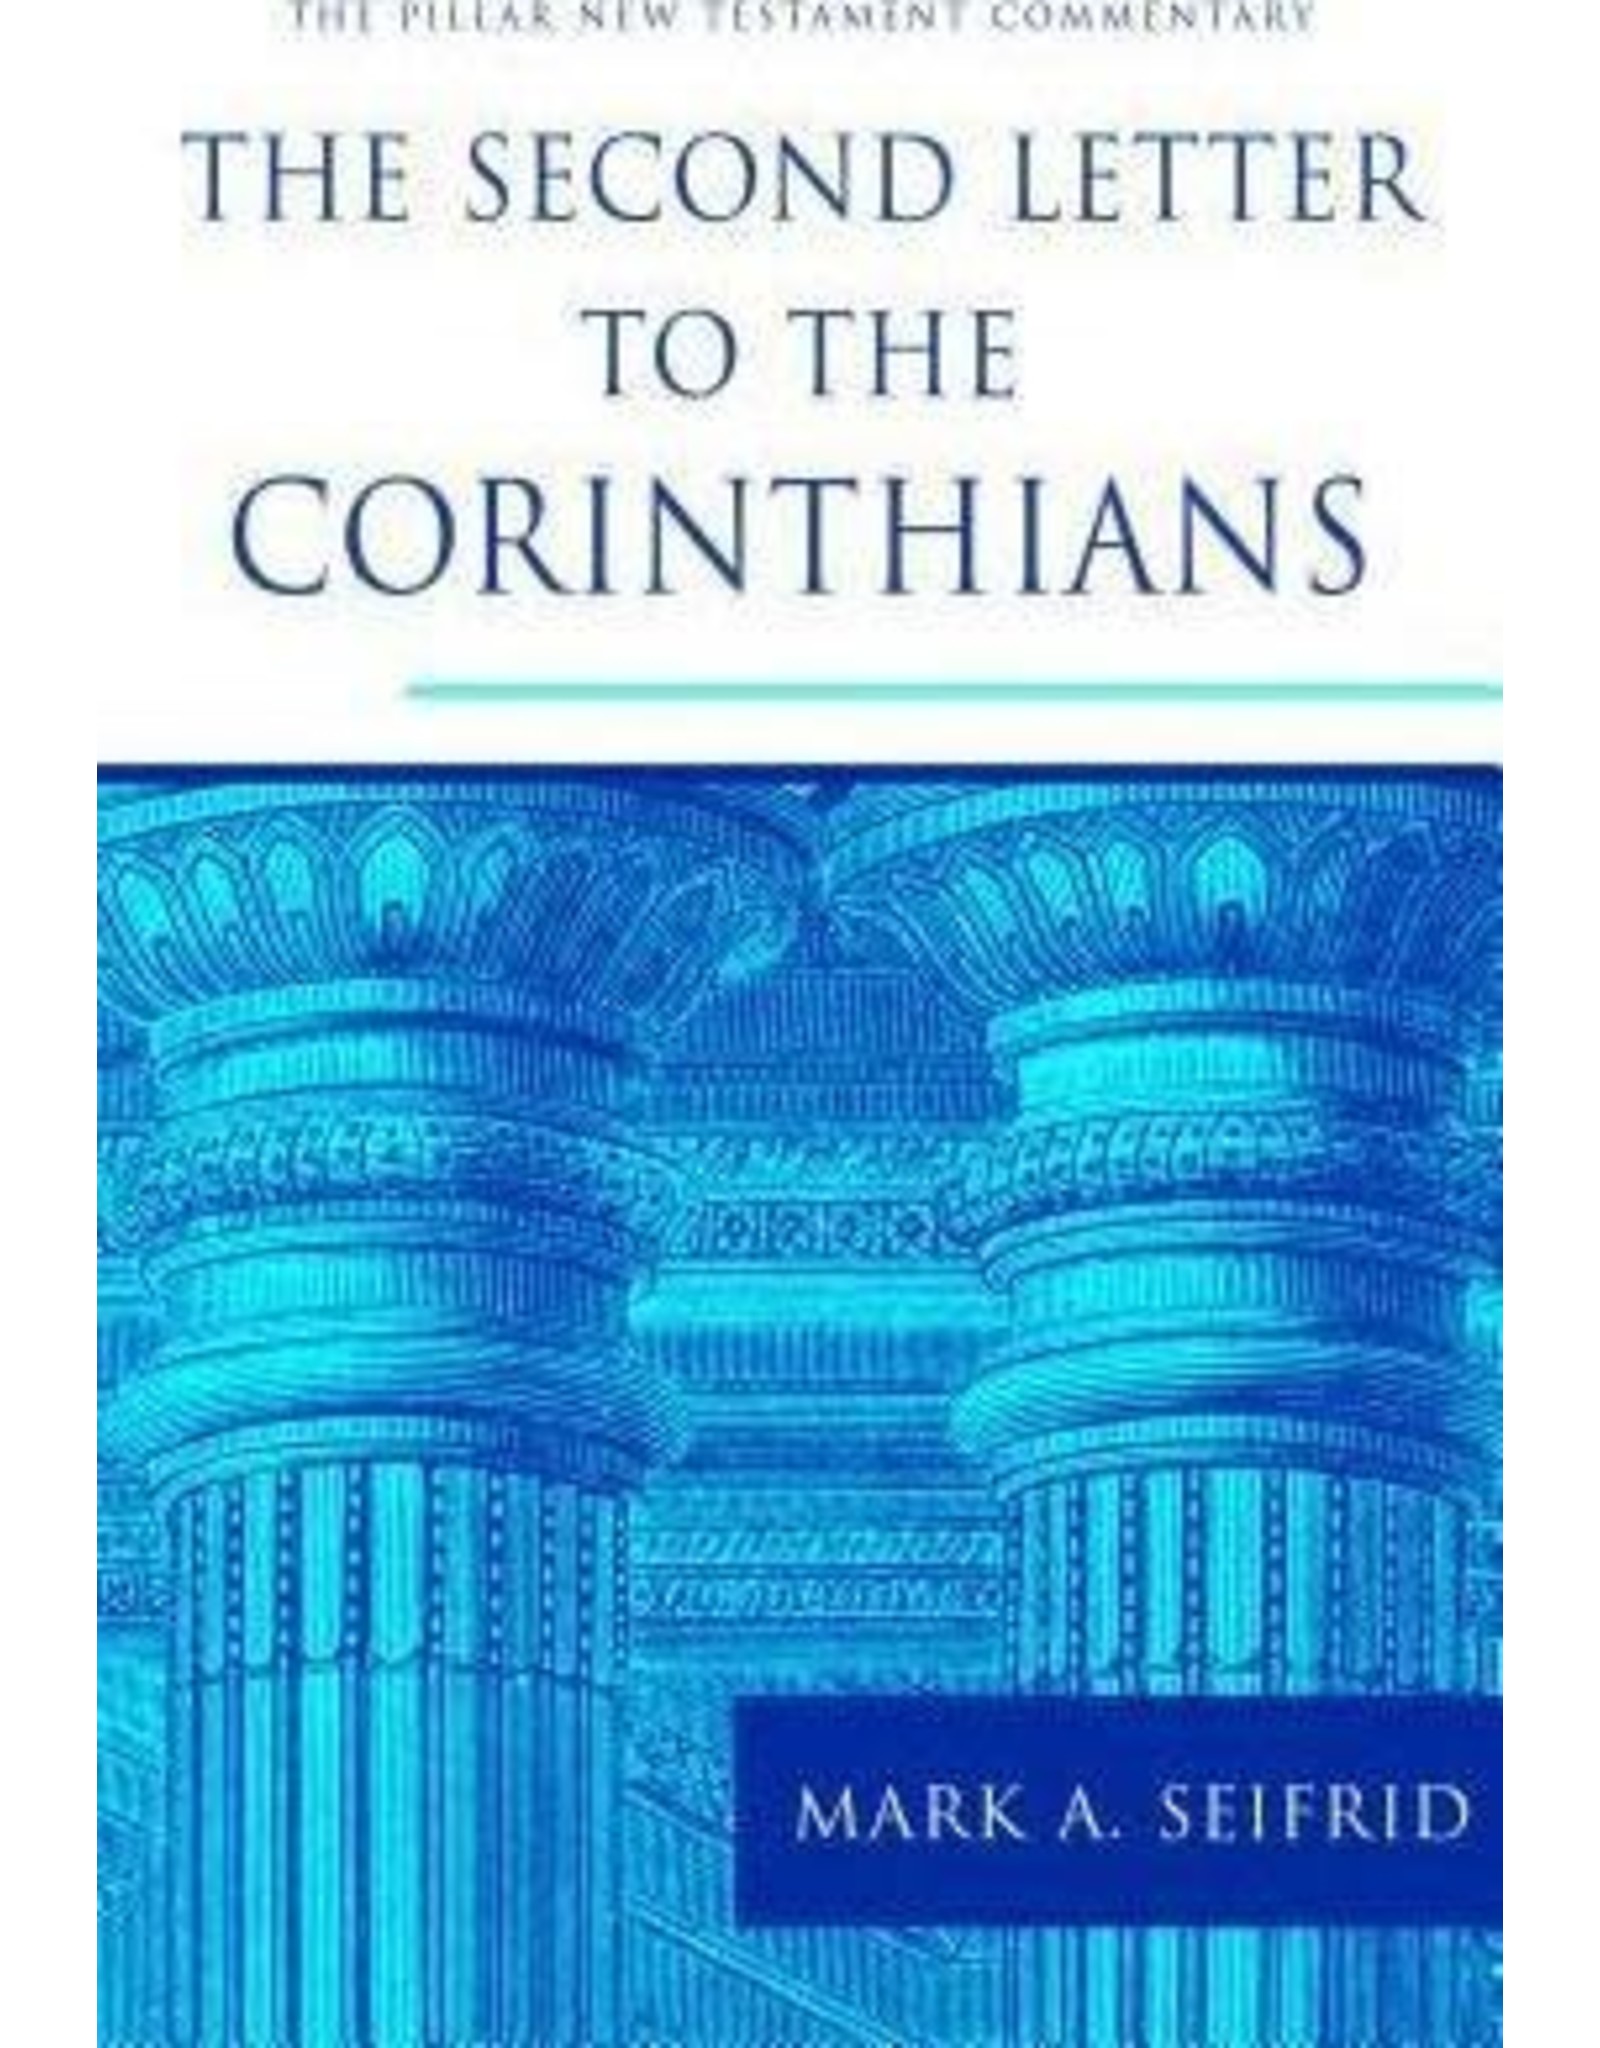 Seifrid Pillar Commentary - 2 Corinthians